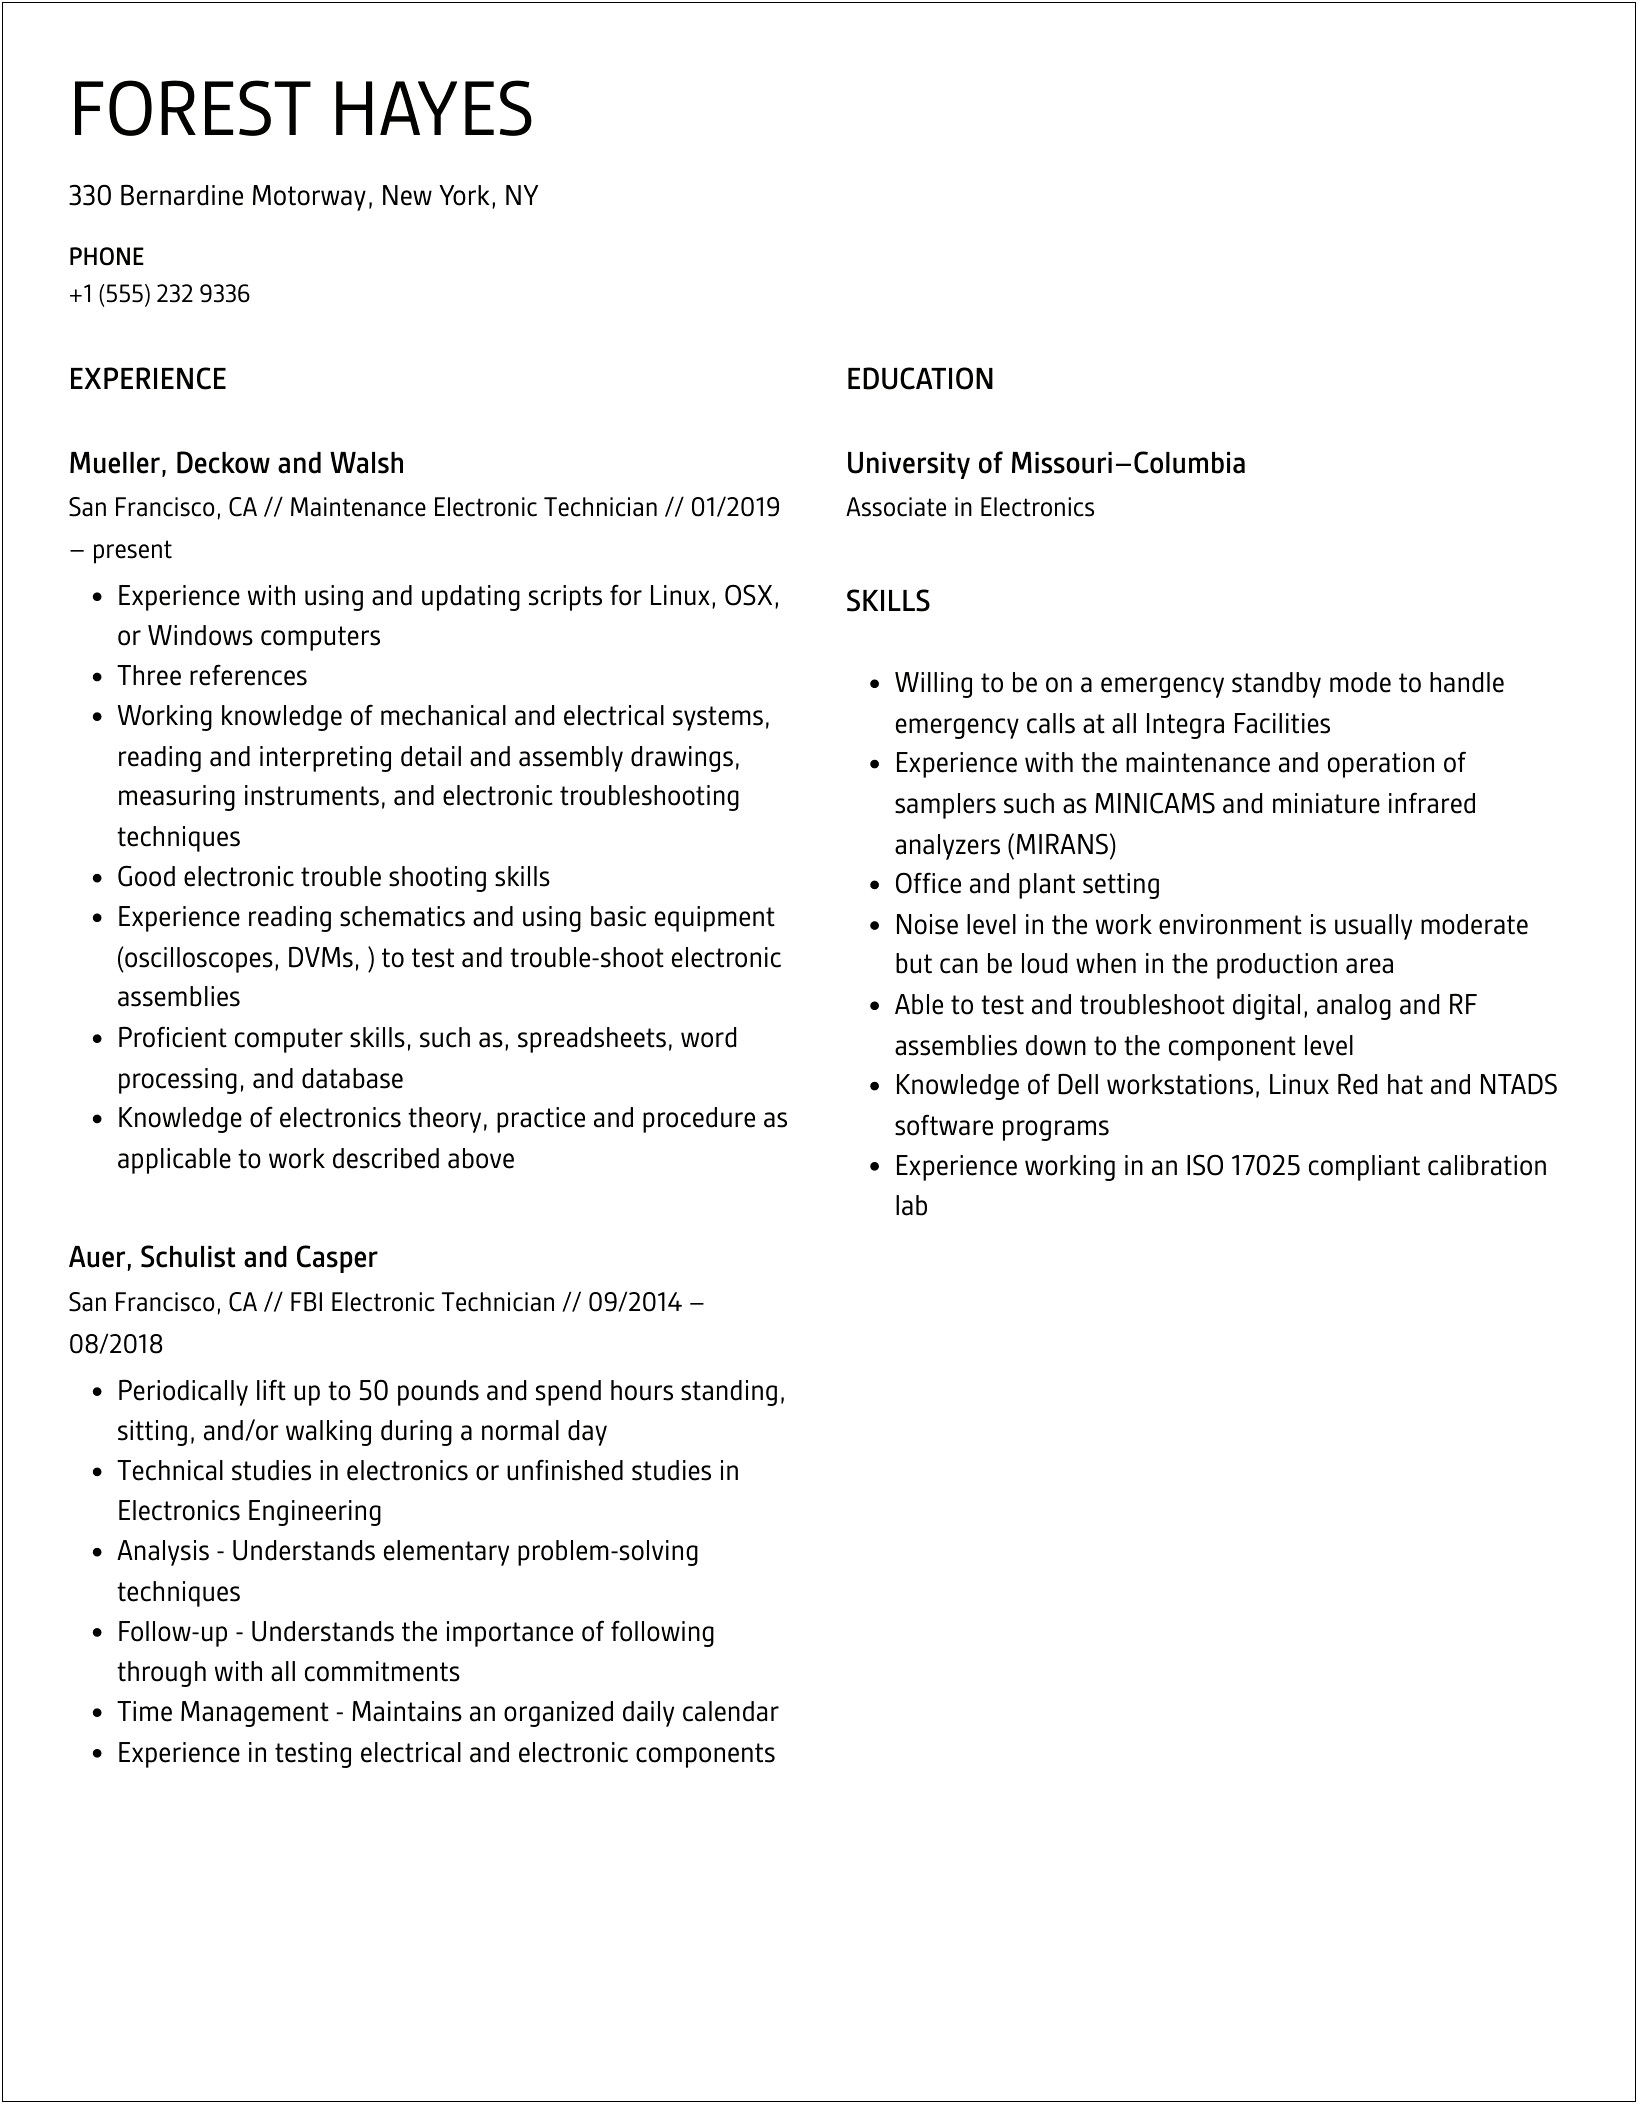 Sample Resume Summary For Electronics Technician